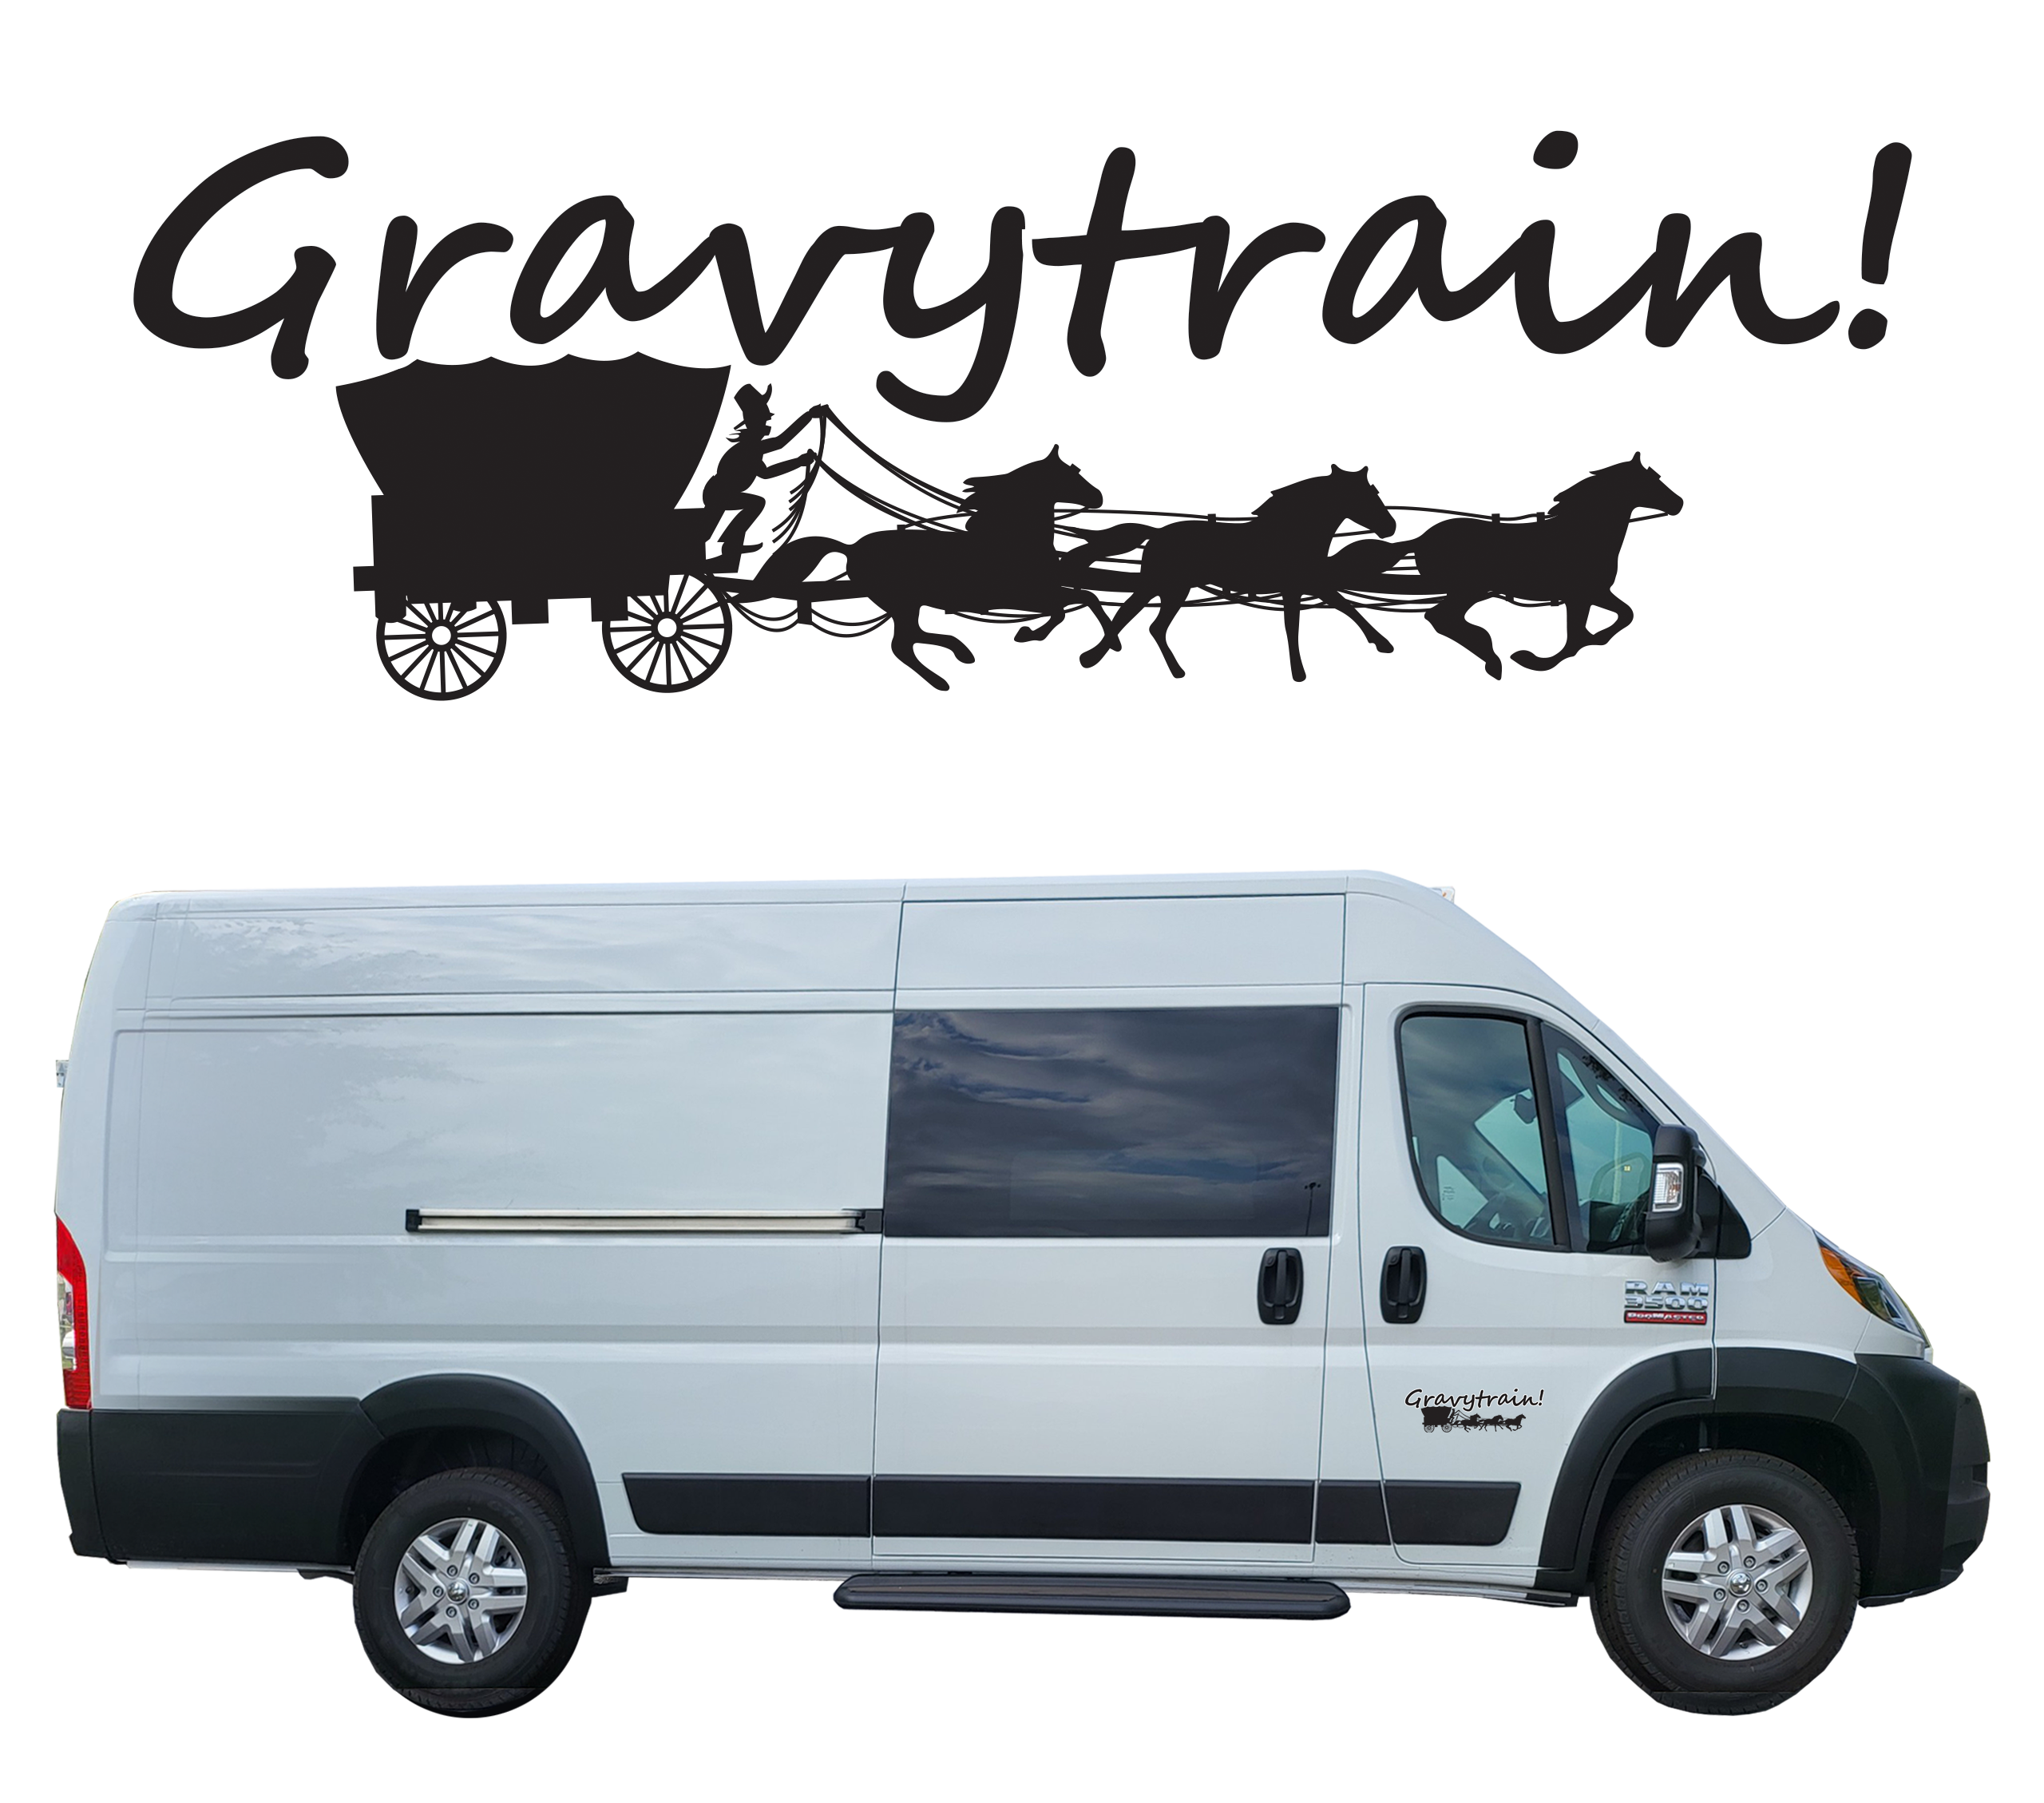 Gravytrain logo and photo of passenger's side.